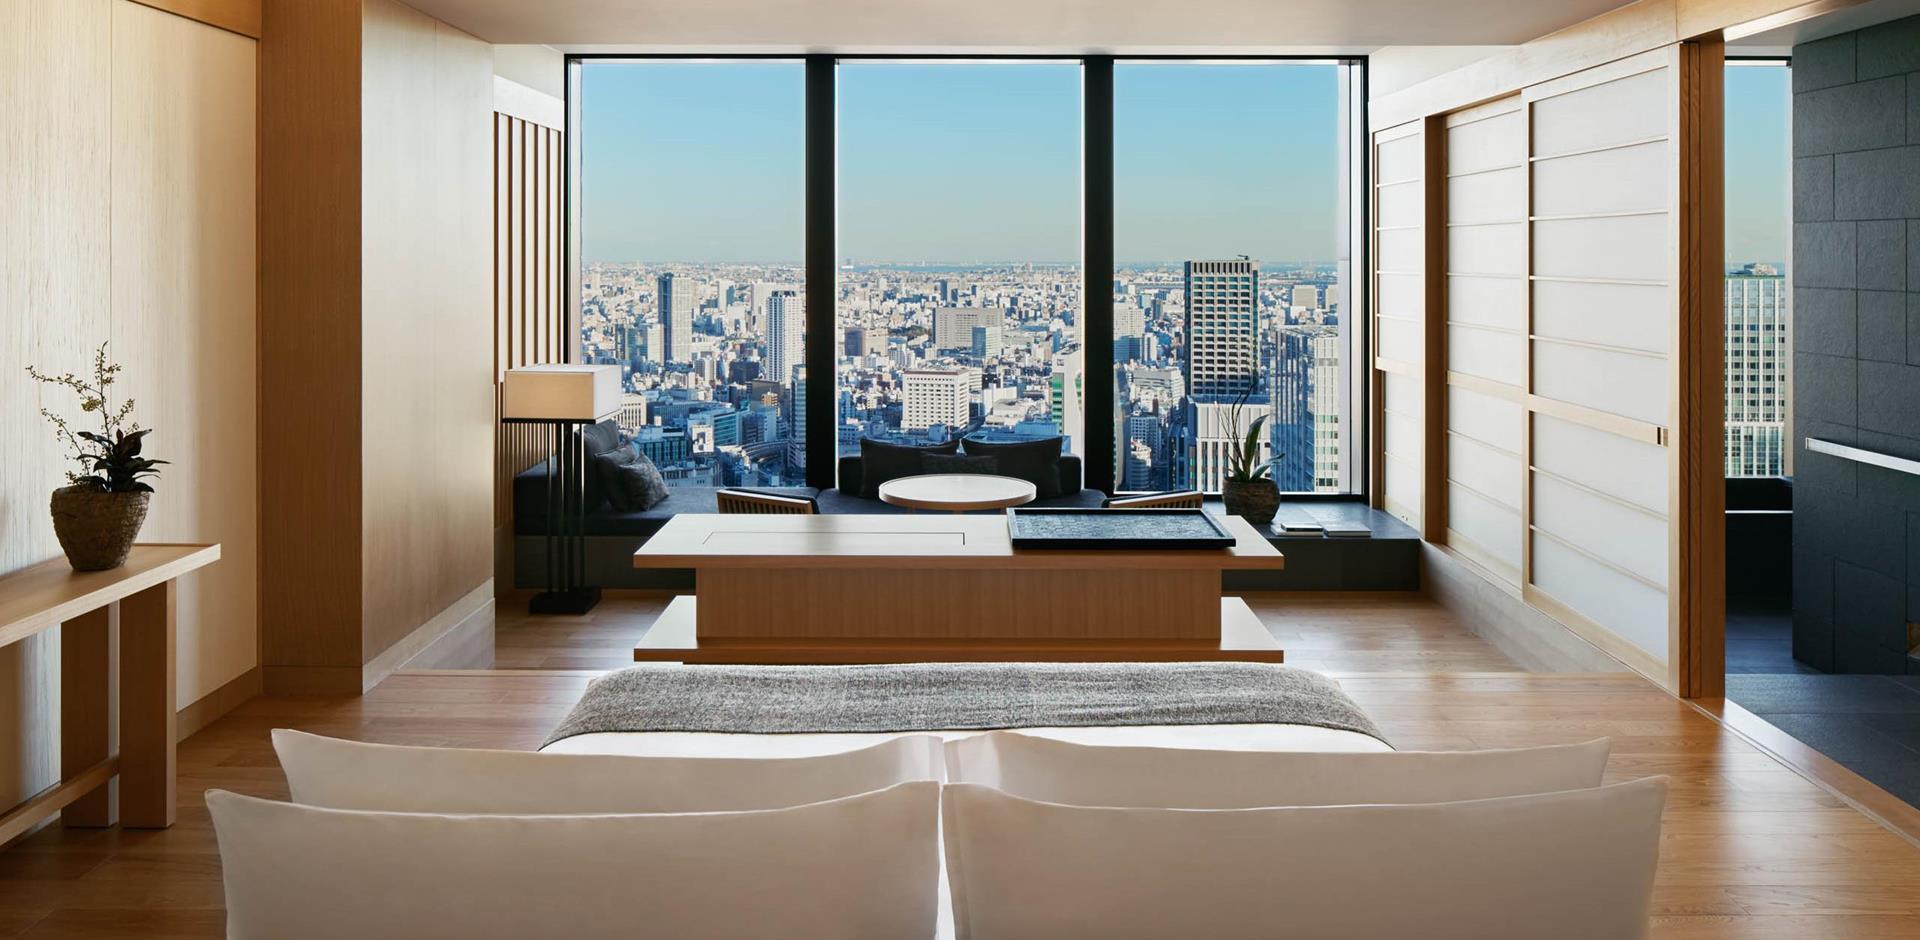 Suite 839, Aman Tokyo, Japan